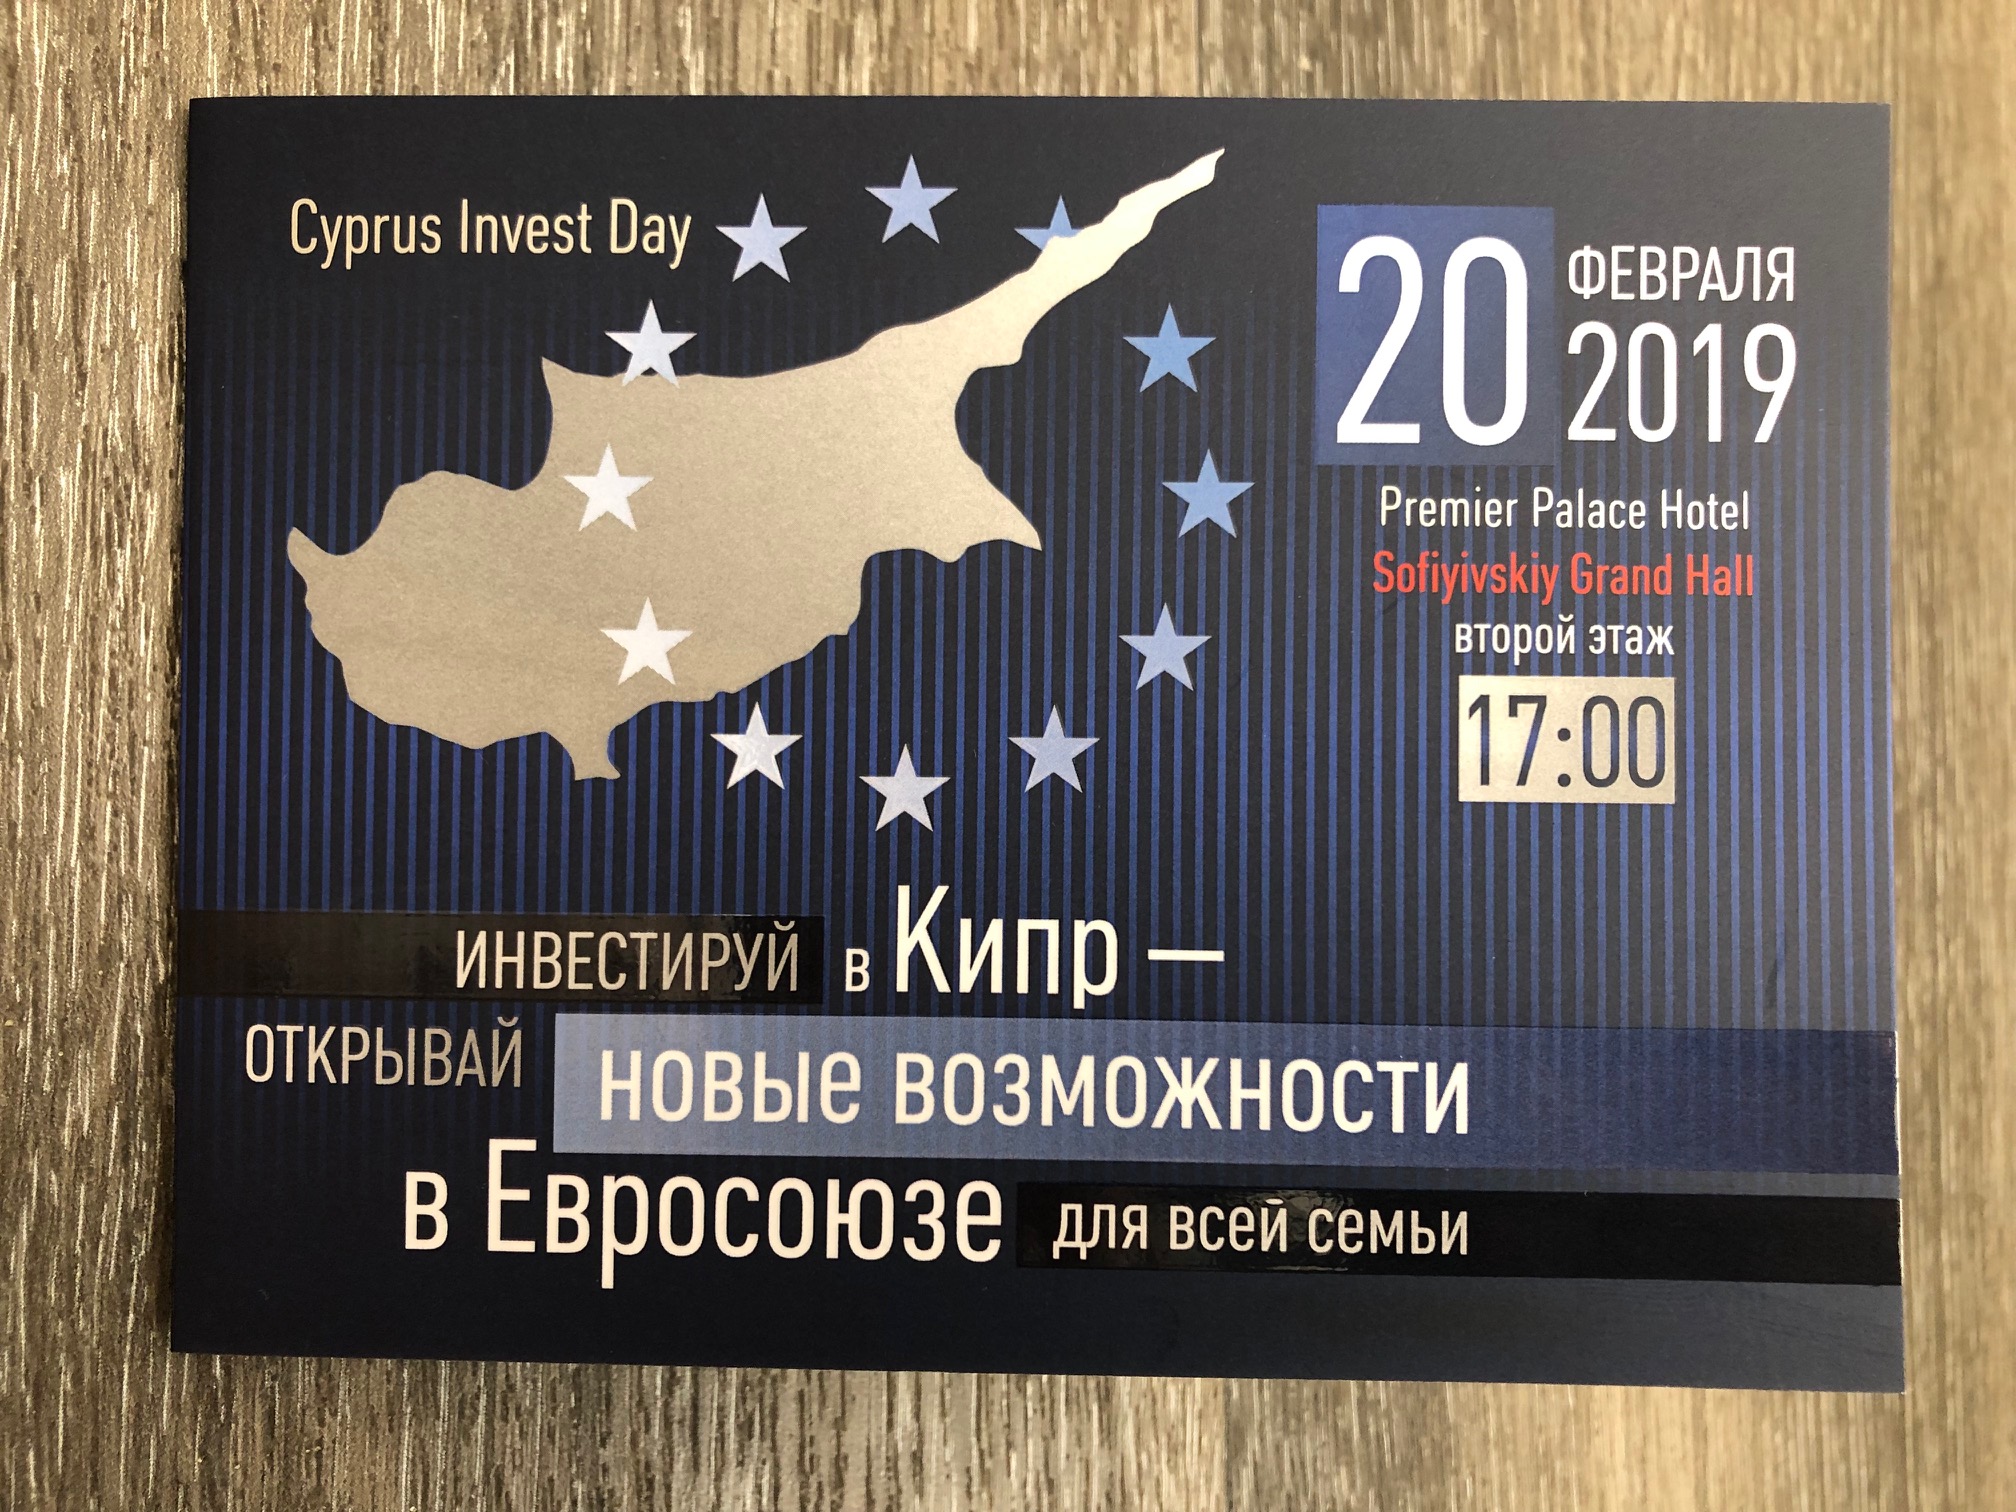 Cyprus Invest Day invitation